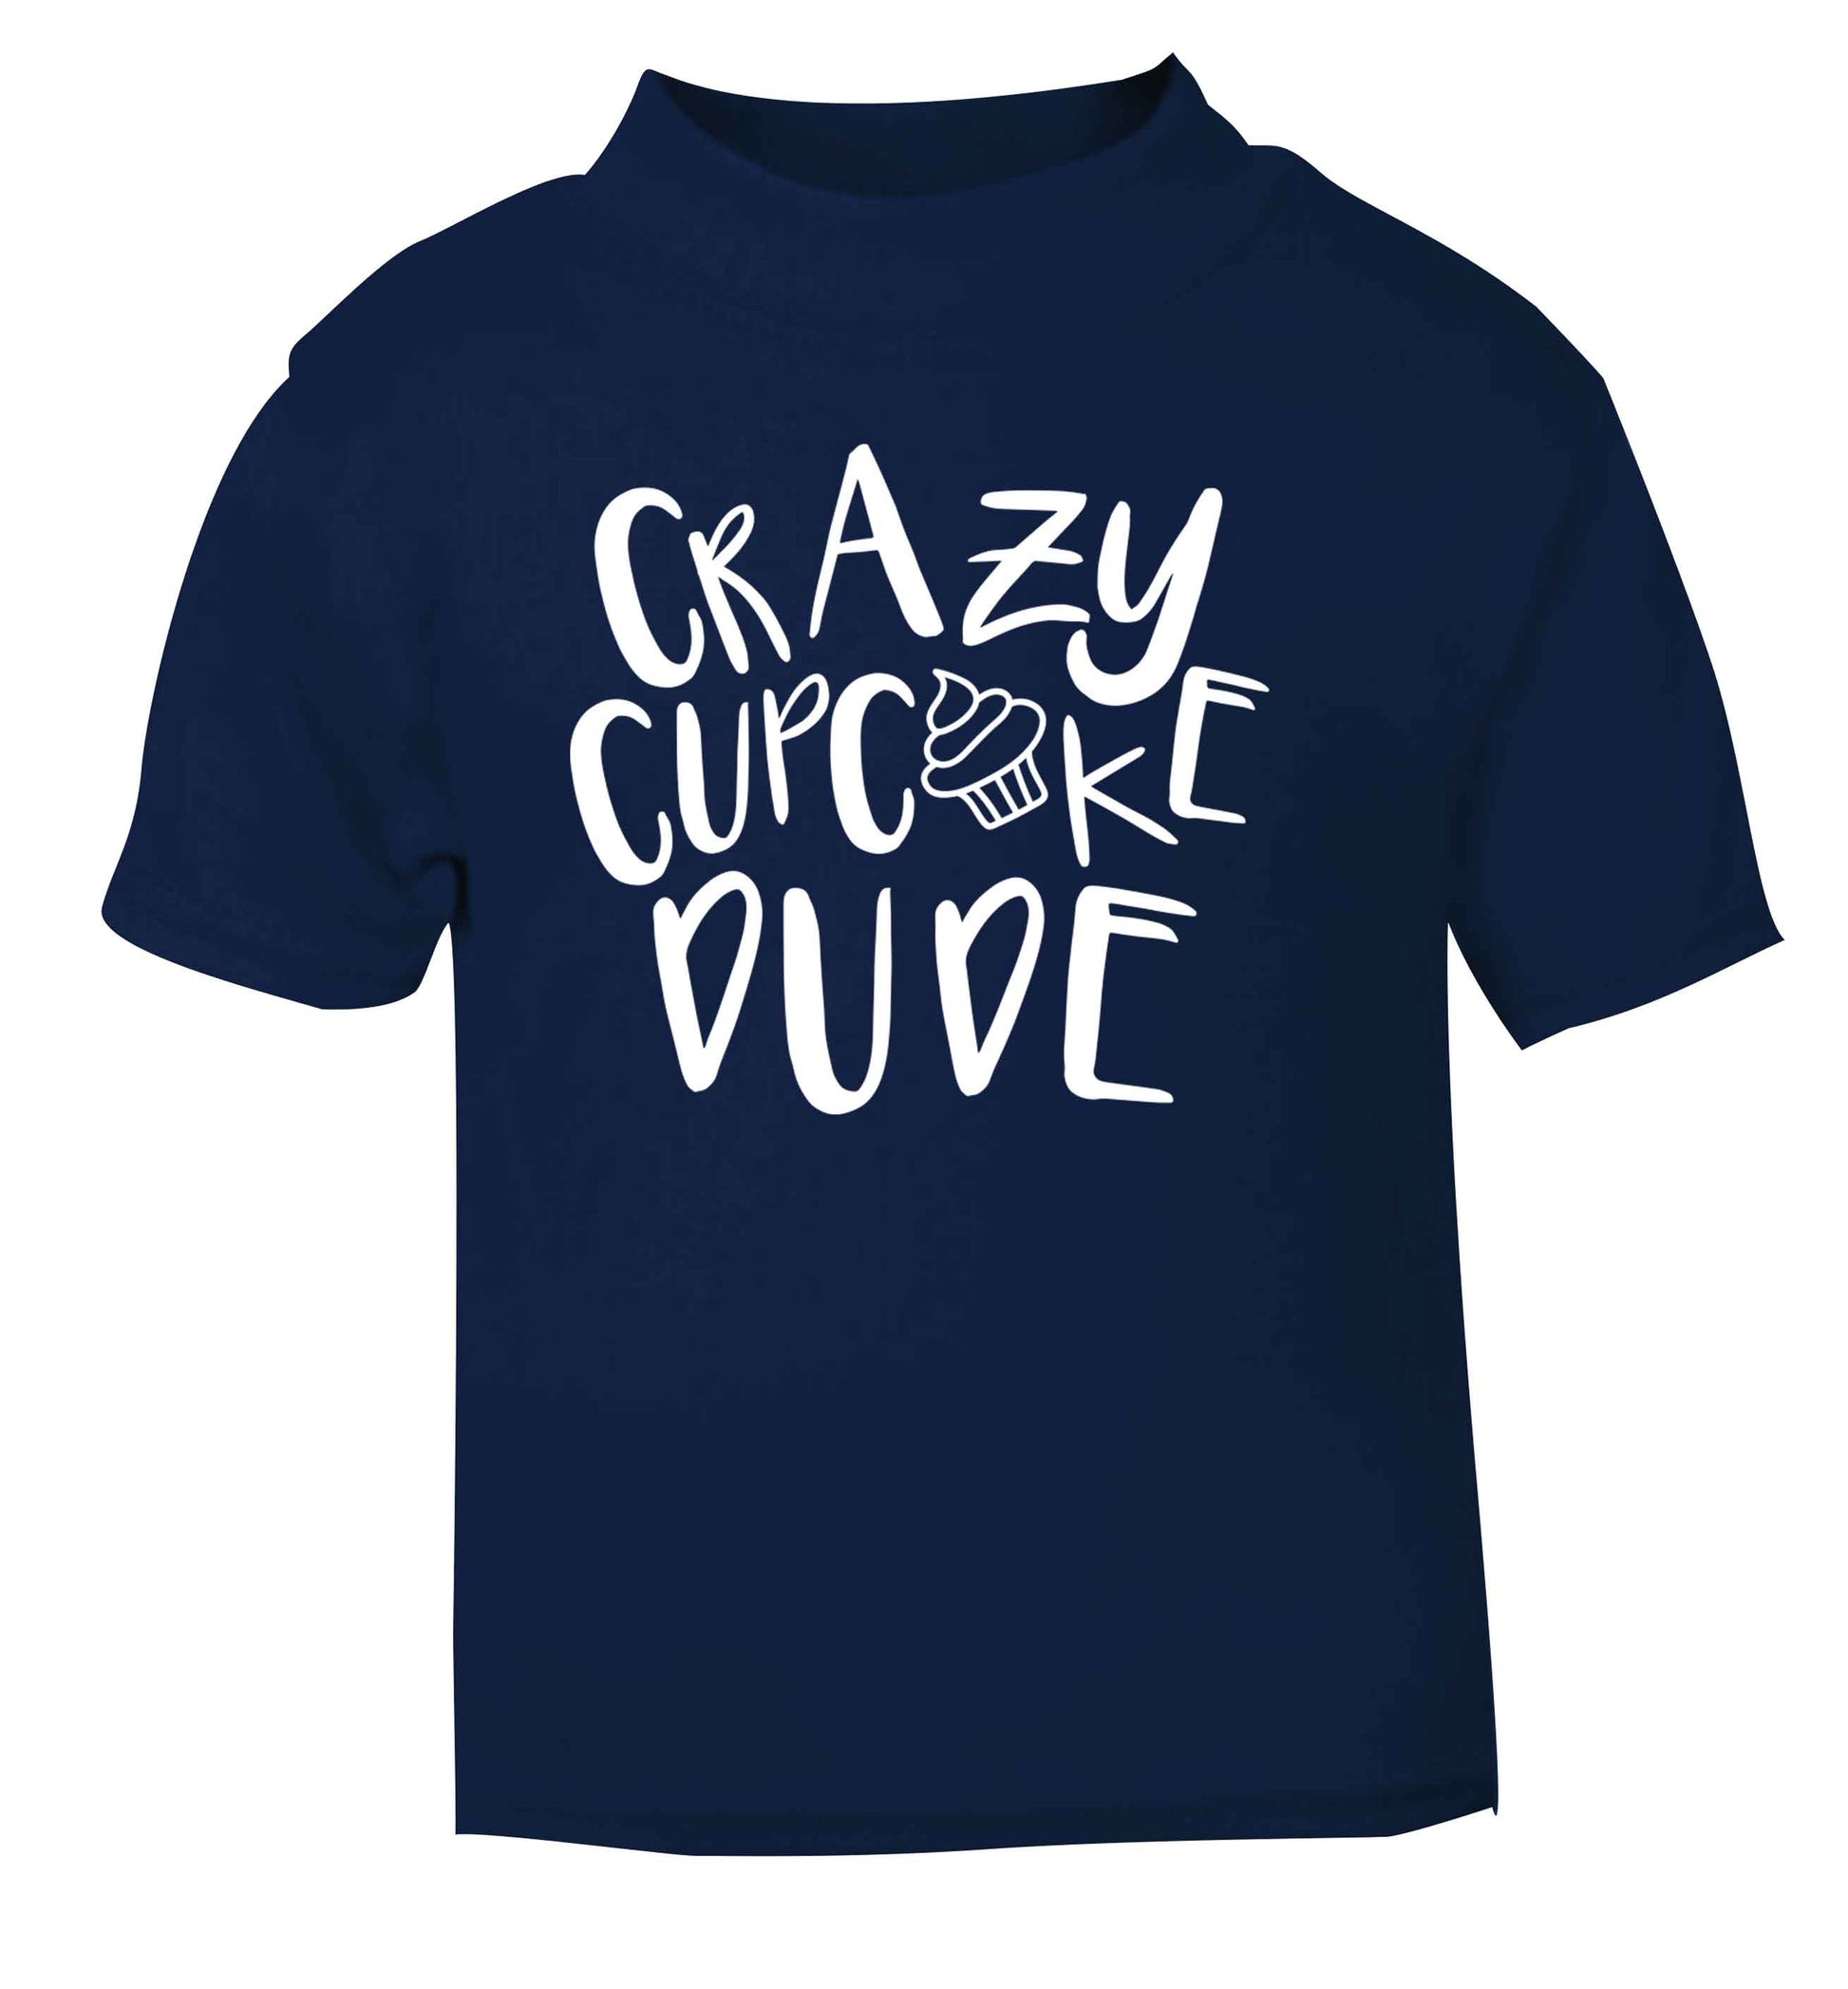 Crazy cupcake dude navy Baby Toddler Tshirt 2 Years